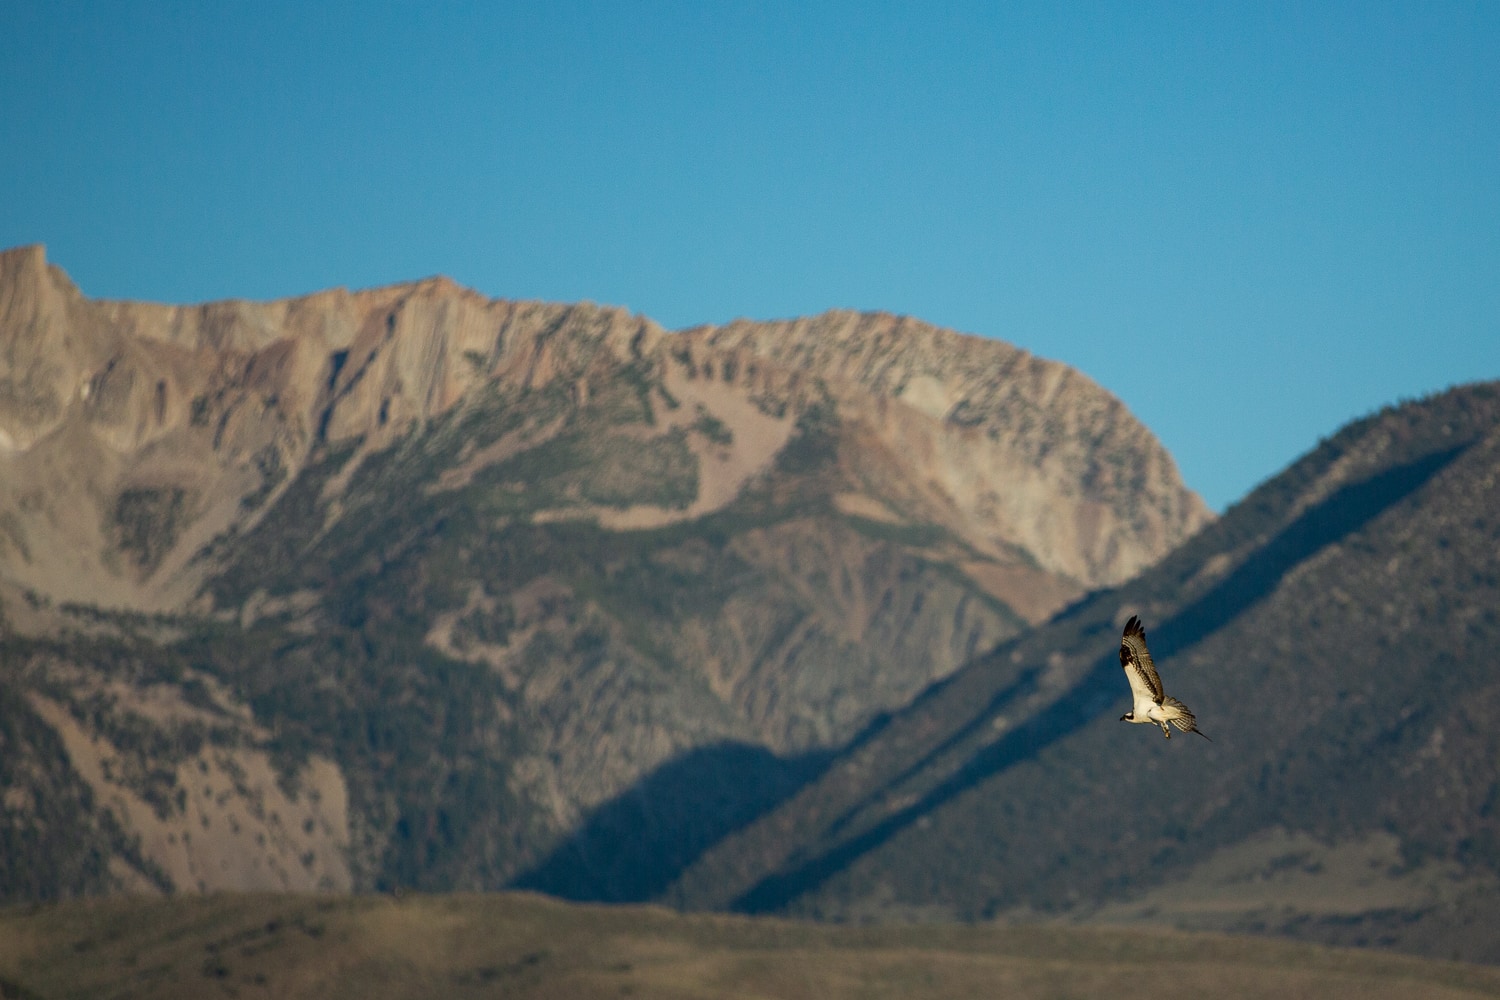 An Osprey in flight against the Sierra mountains.